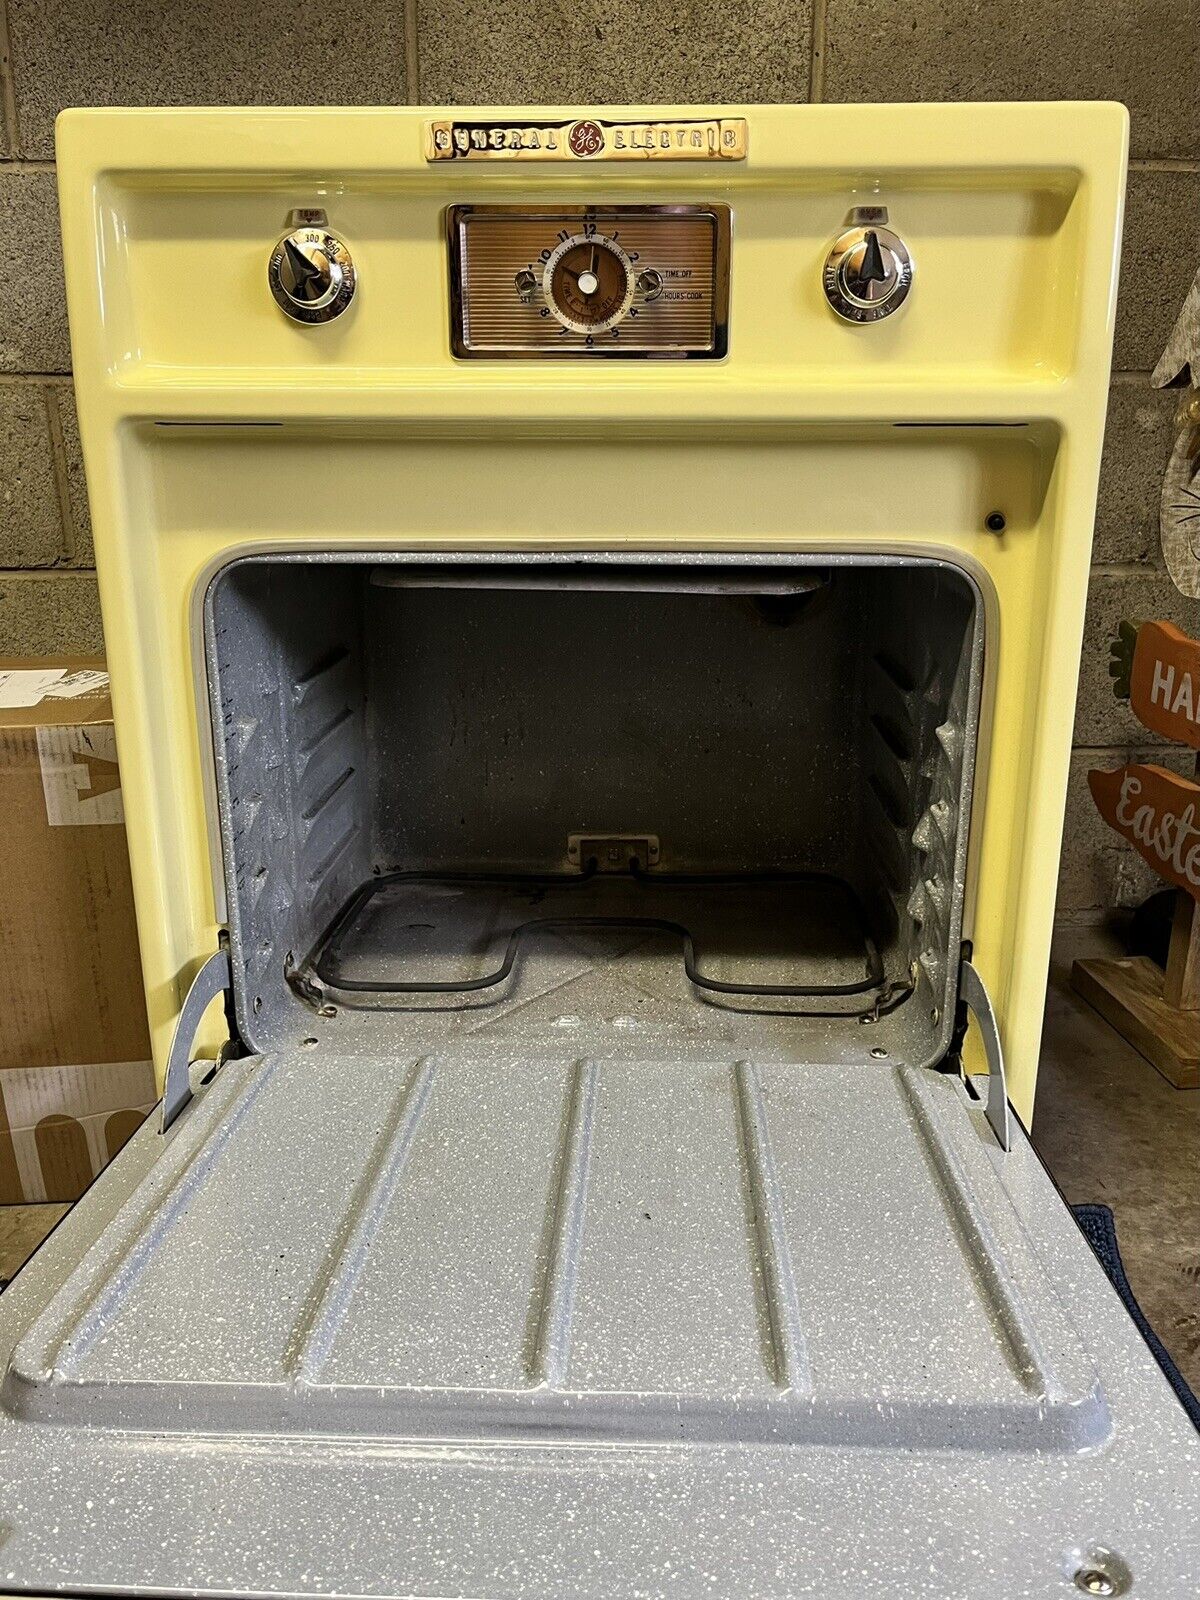 Vintage 1955 General Electric built In Oven